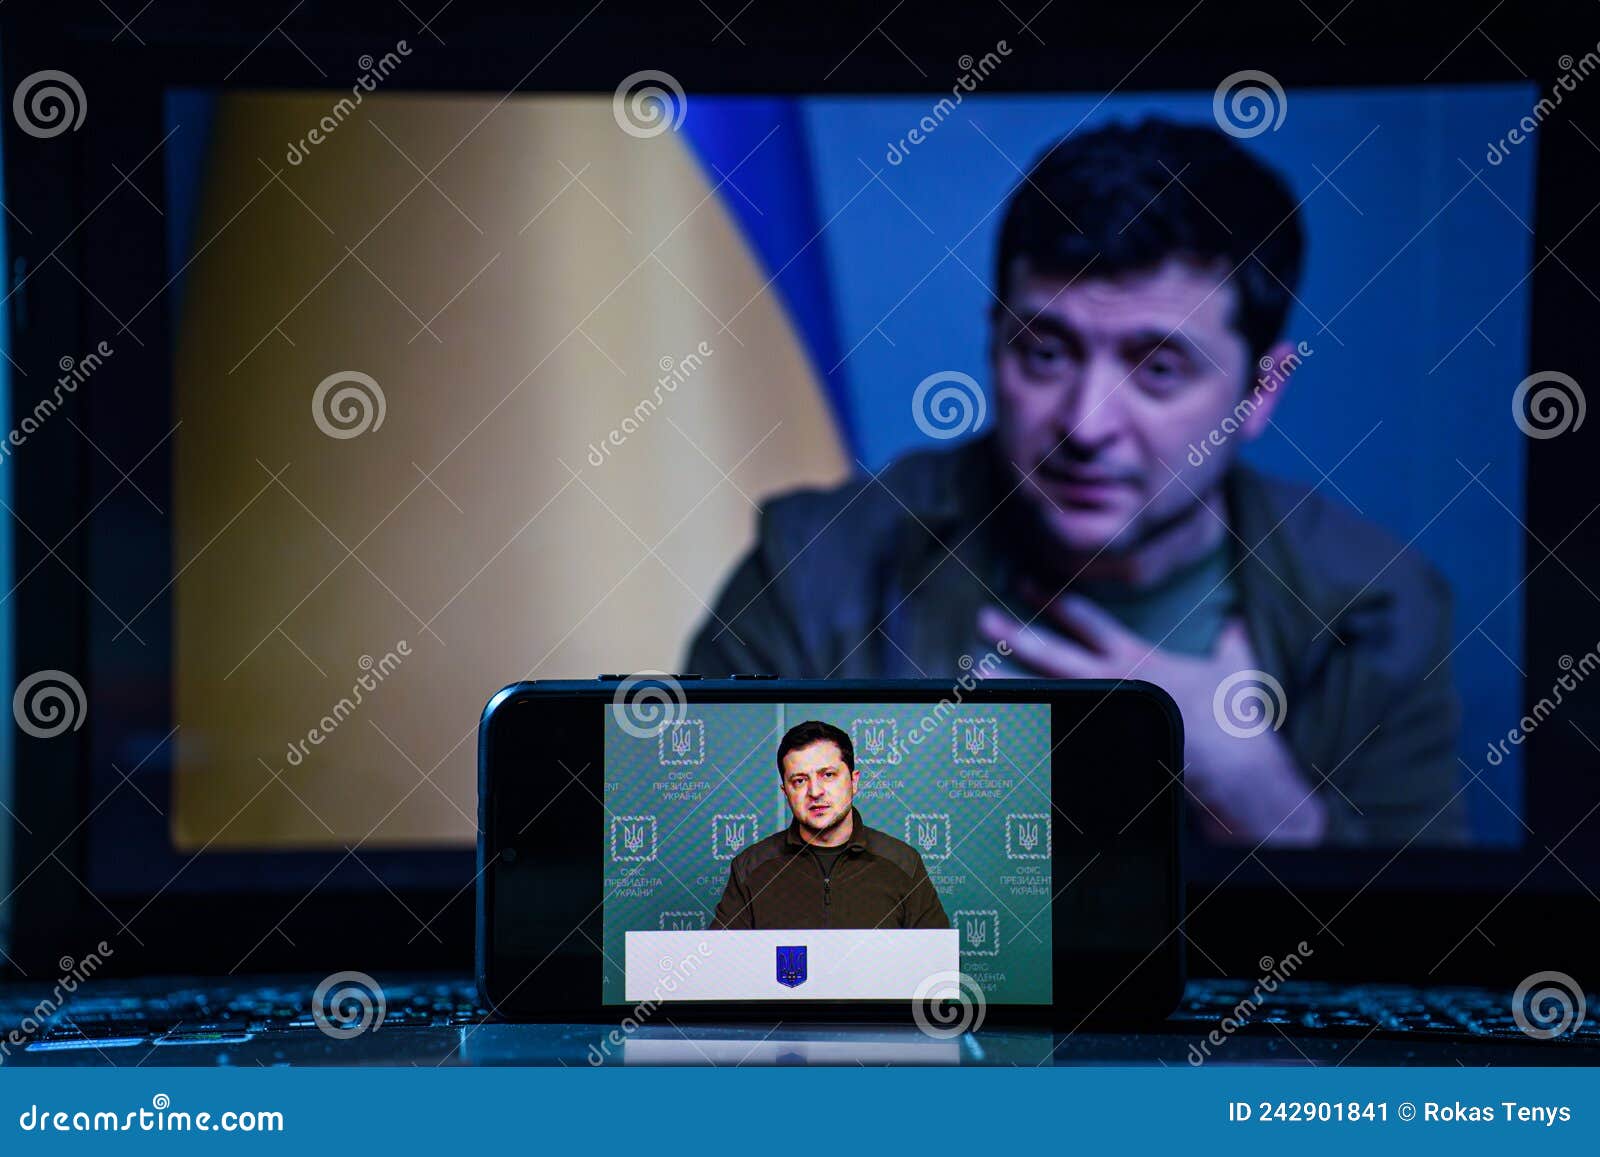 Volodymyr Zelensky the president of Ukraine on TV. Volodymyr Zelenskyy speech to people on TV